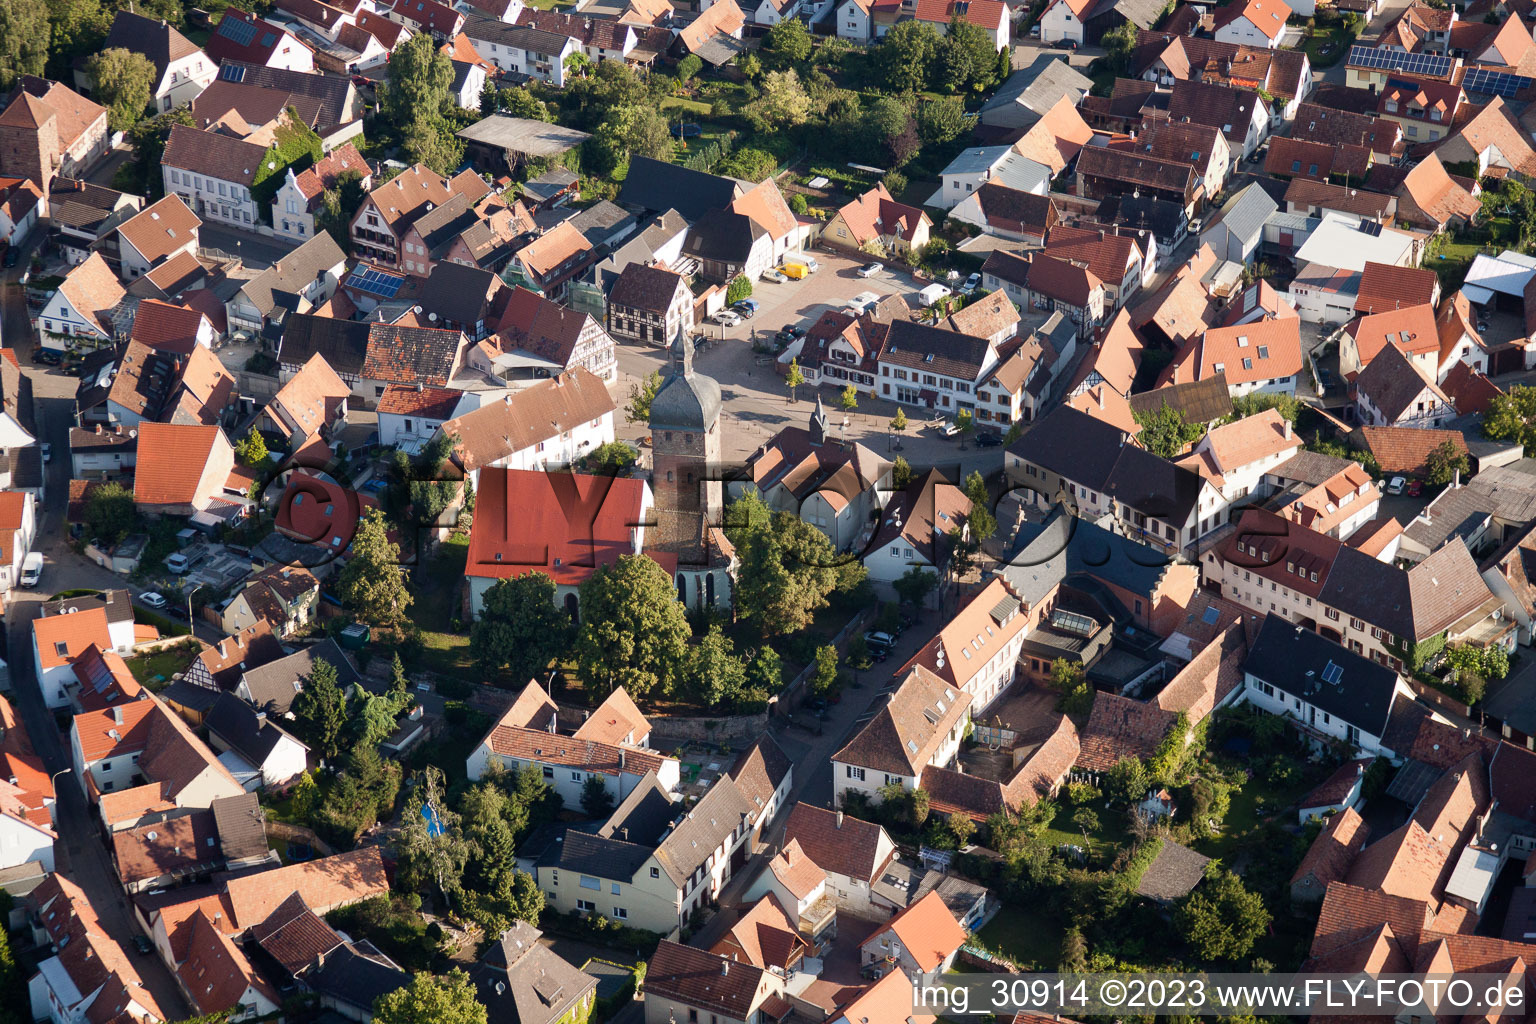 District Billigheim in Billigheim-Ingenheim in the state Rhineland-Palatinate, Germany out of the air